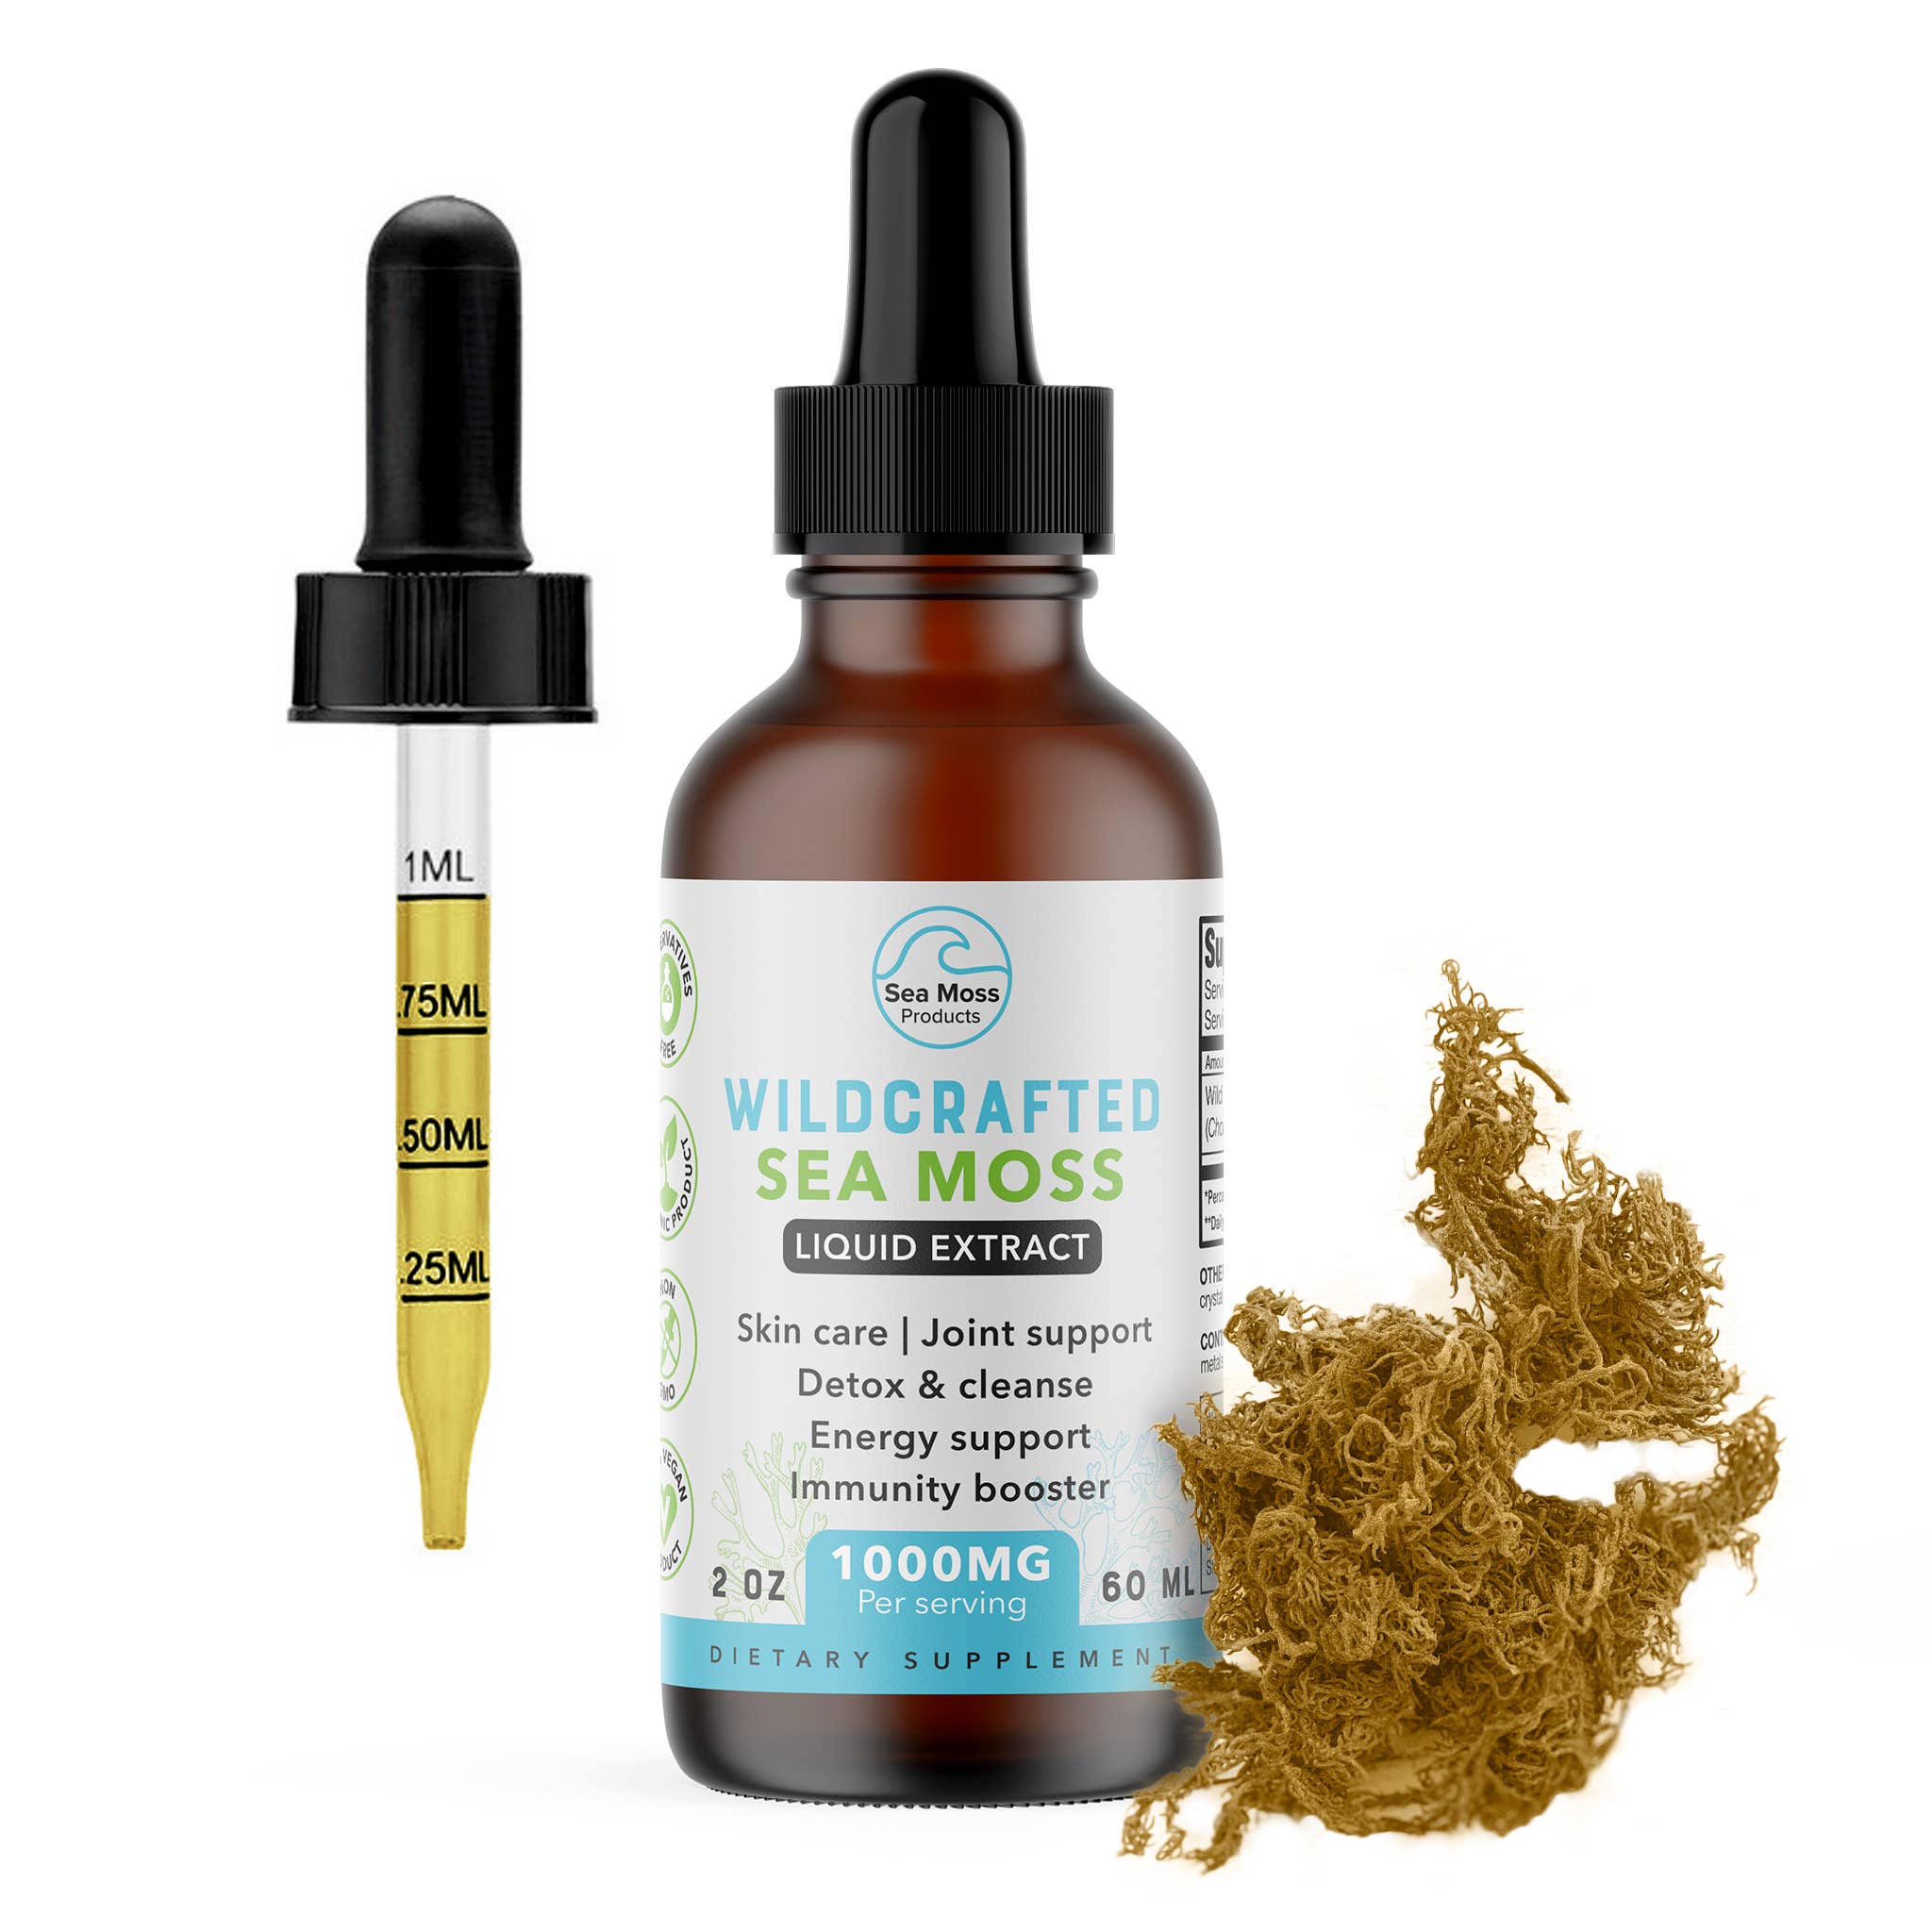 Sea moss warm vanilla body oil